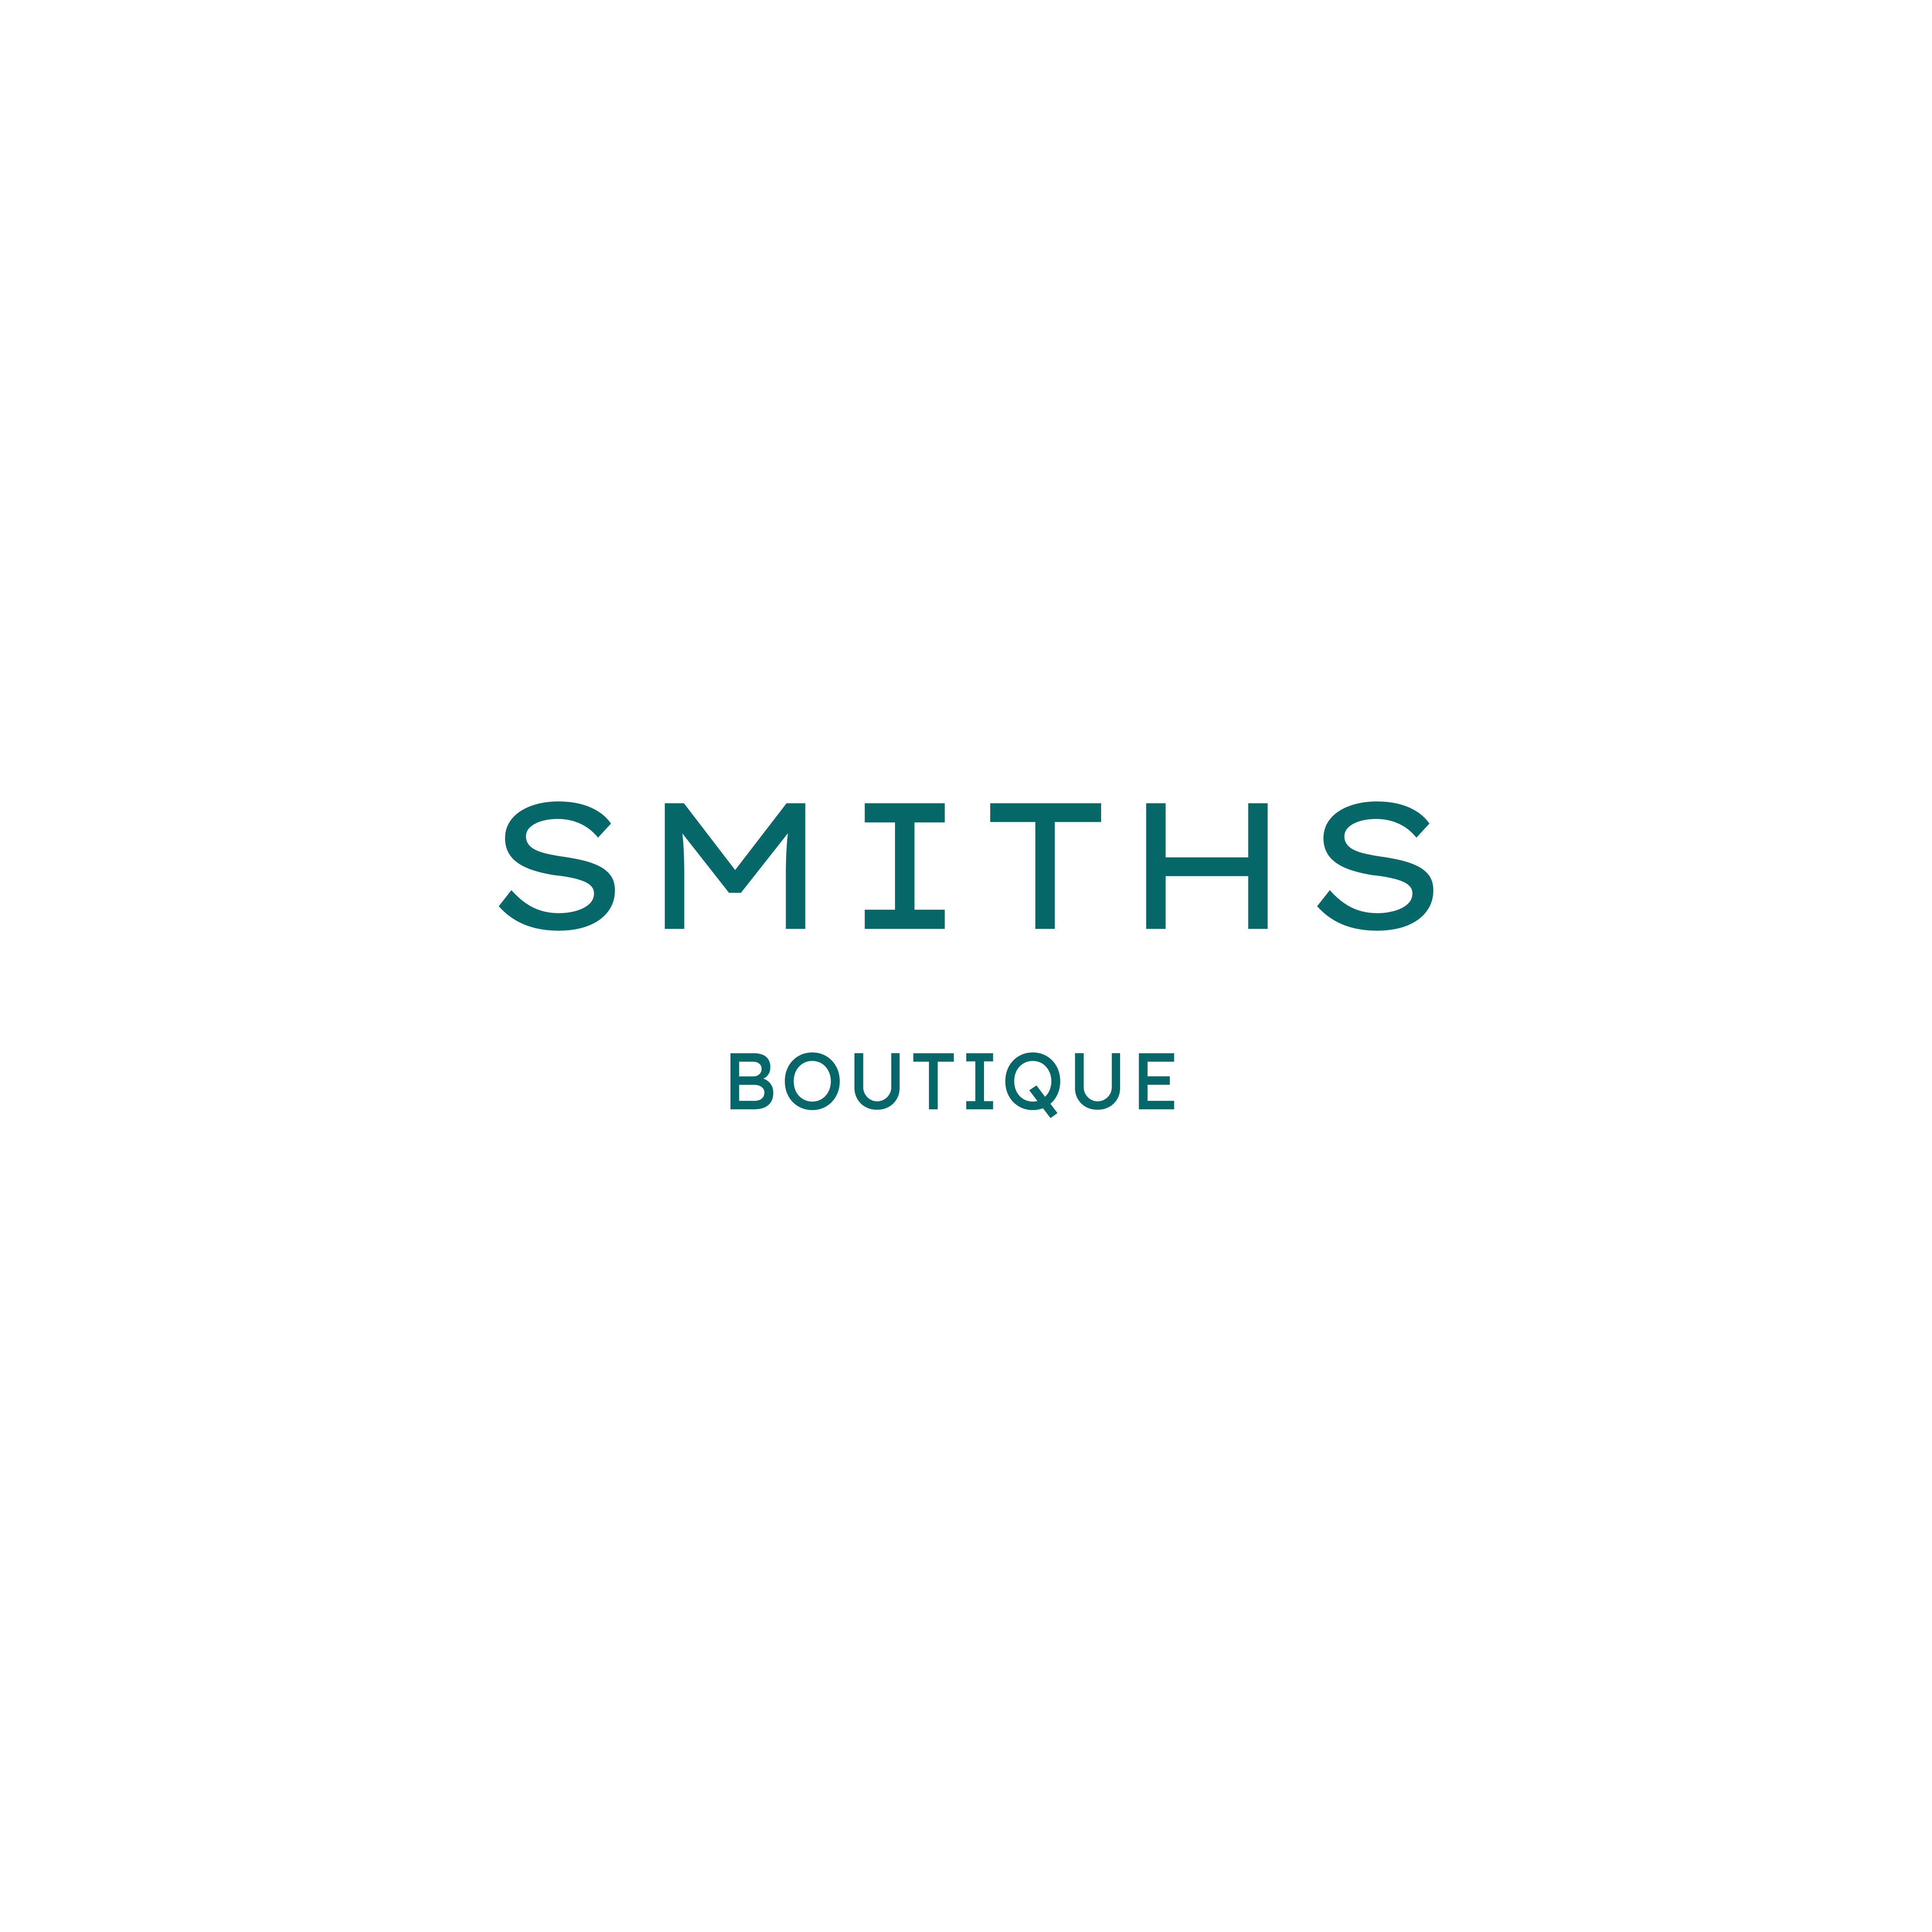 Smiths Boutique